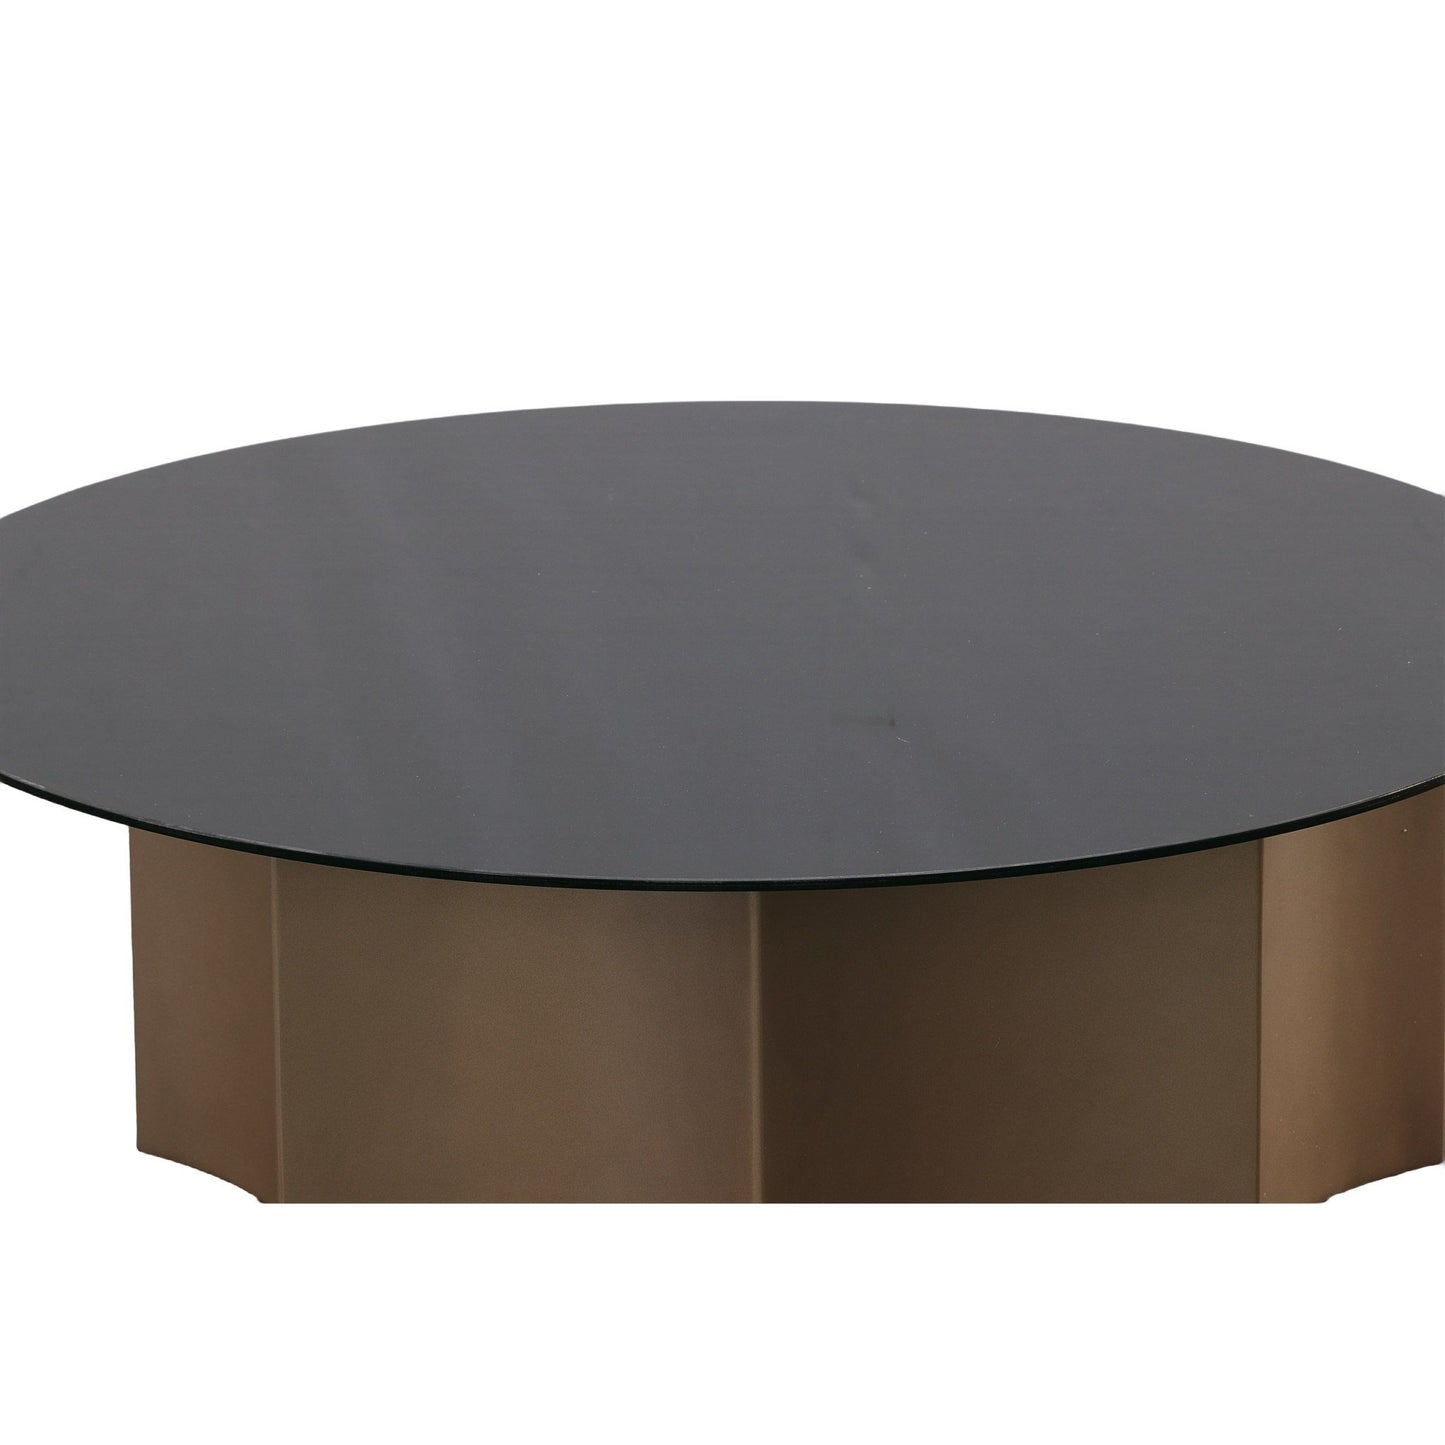 Modrest - Ingram Modern Round Coffee Table